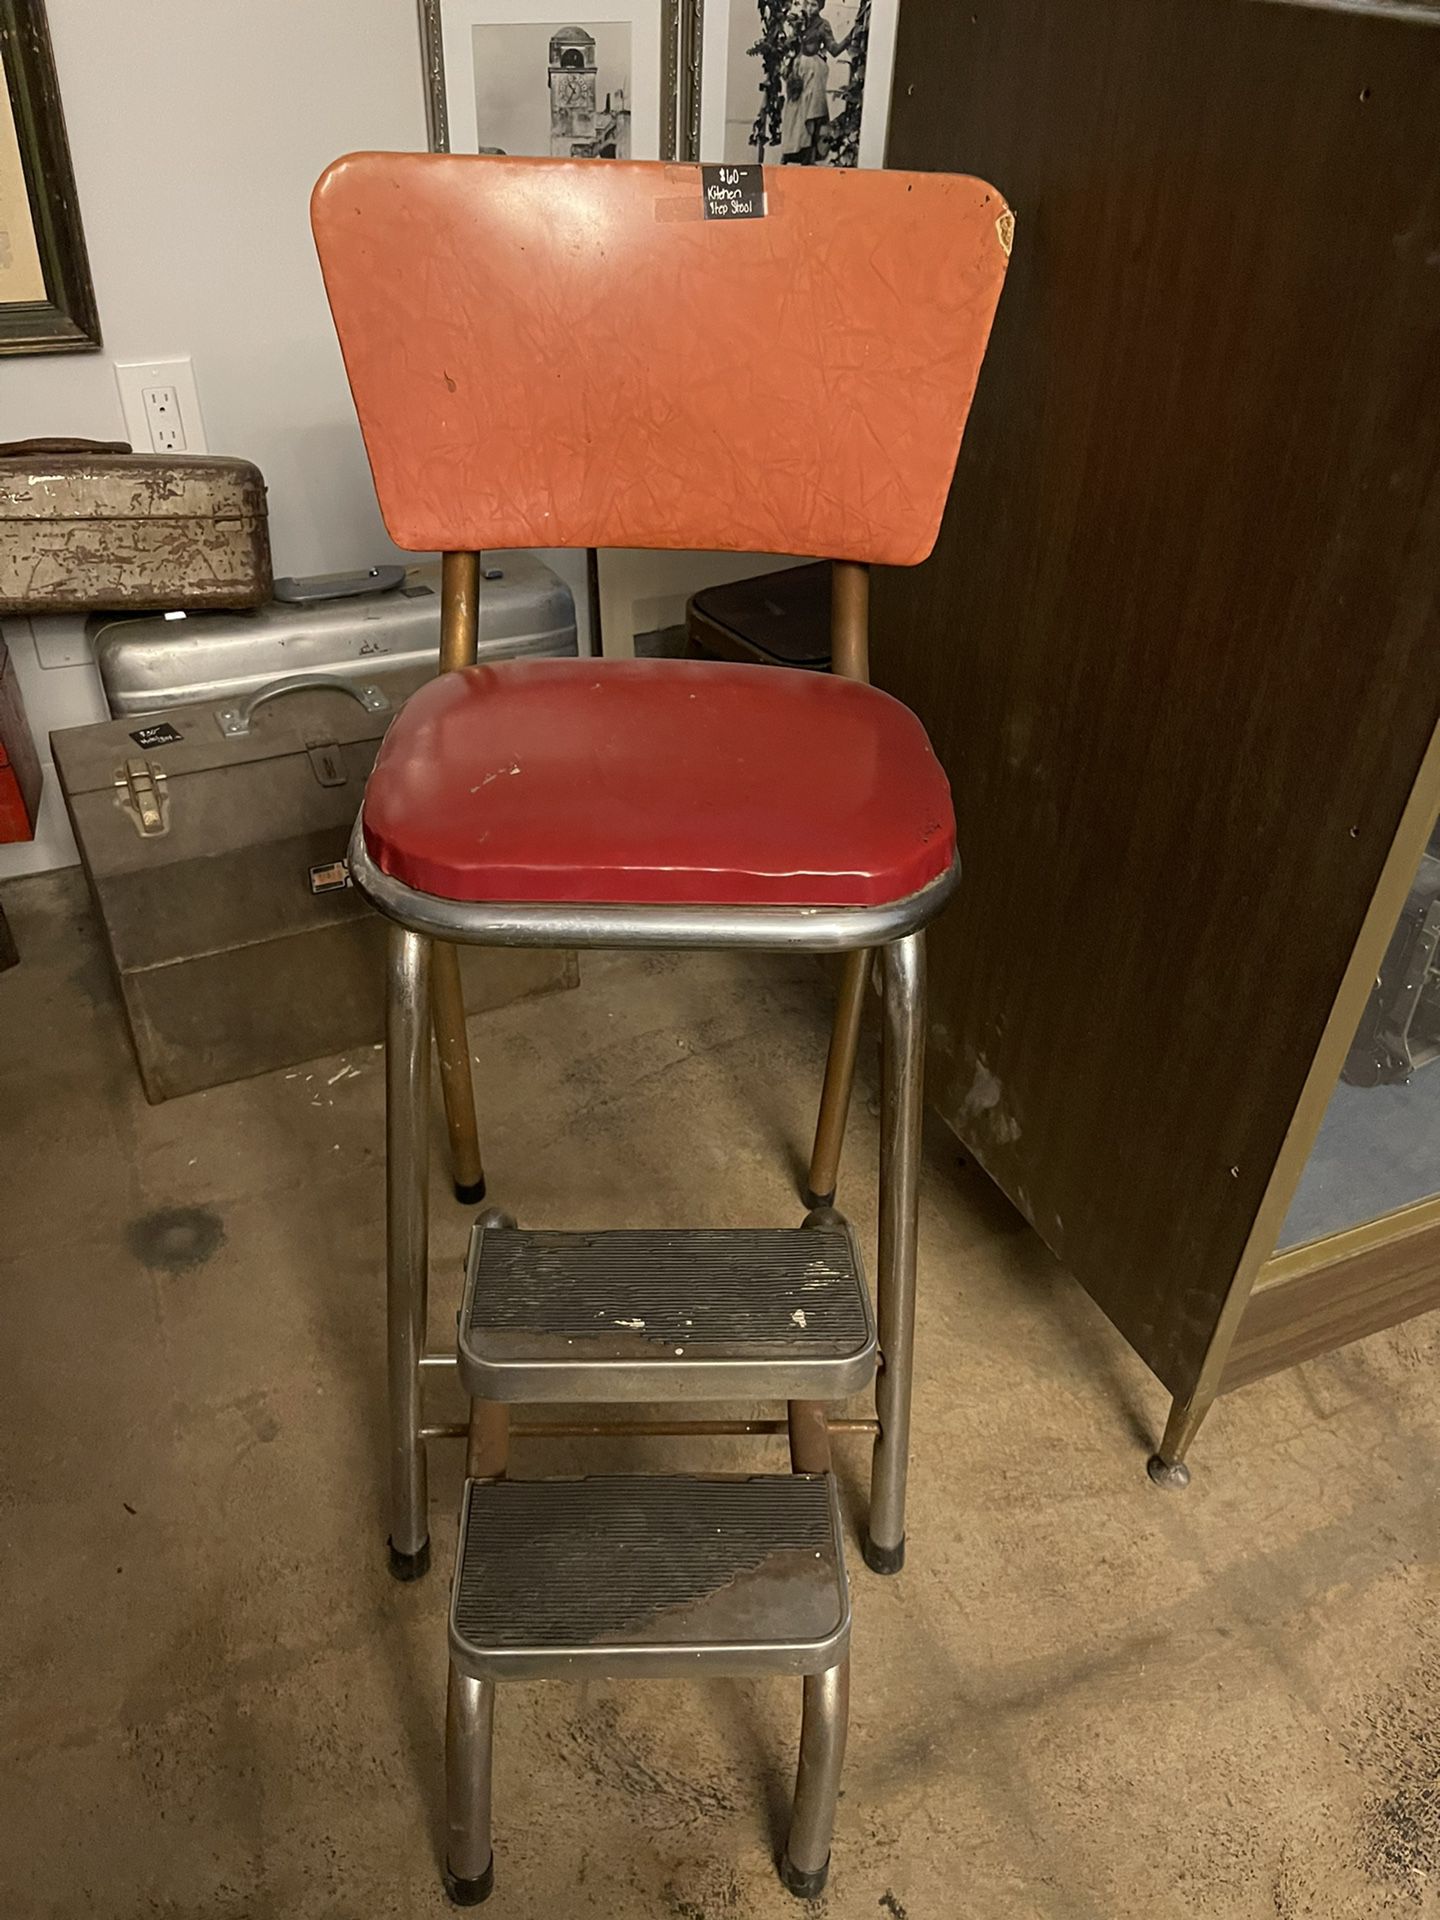 Vintage kitchen step stool 